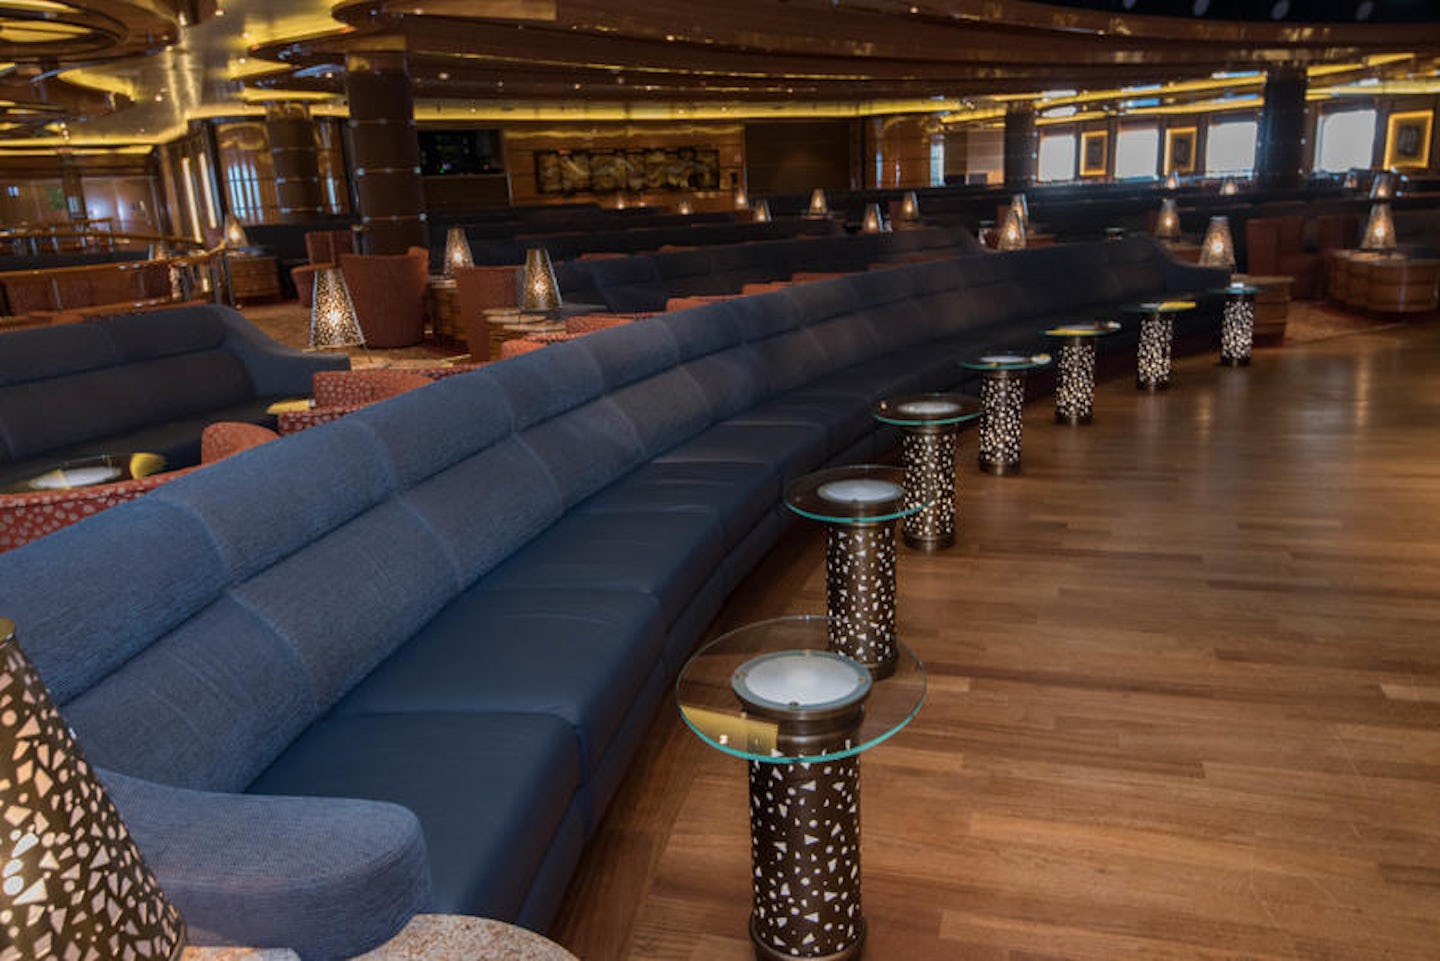 Vista Lounge on Royal Princess